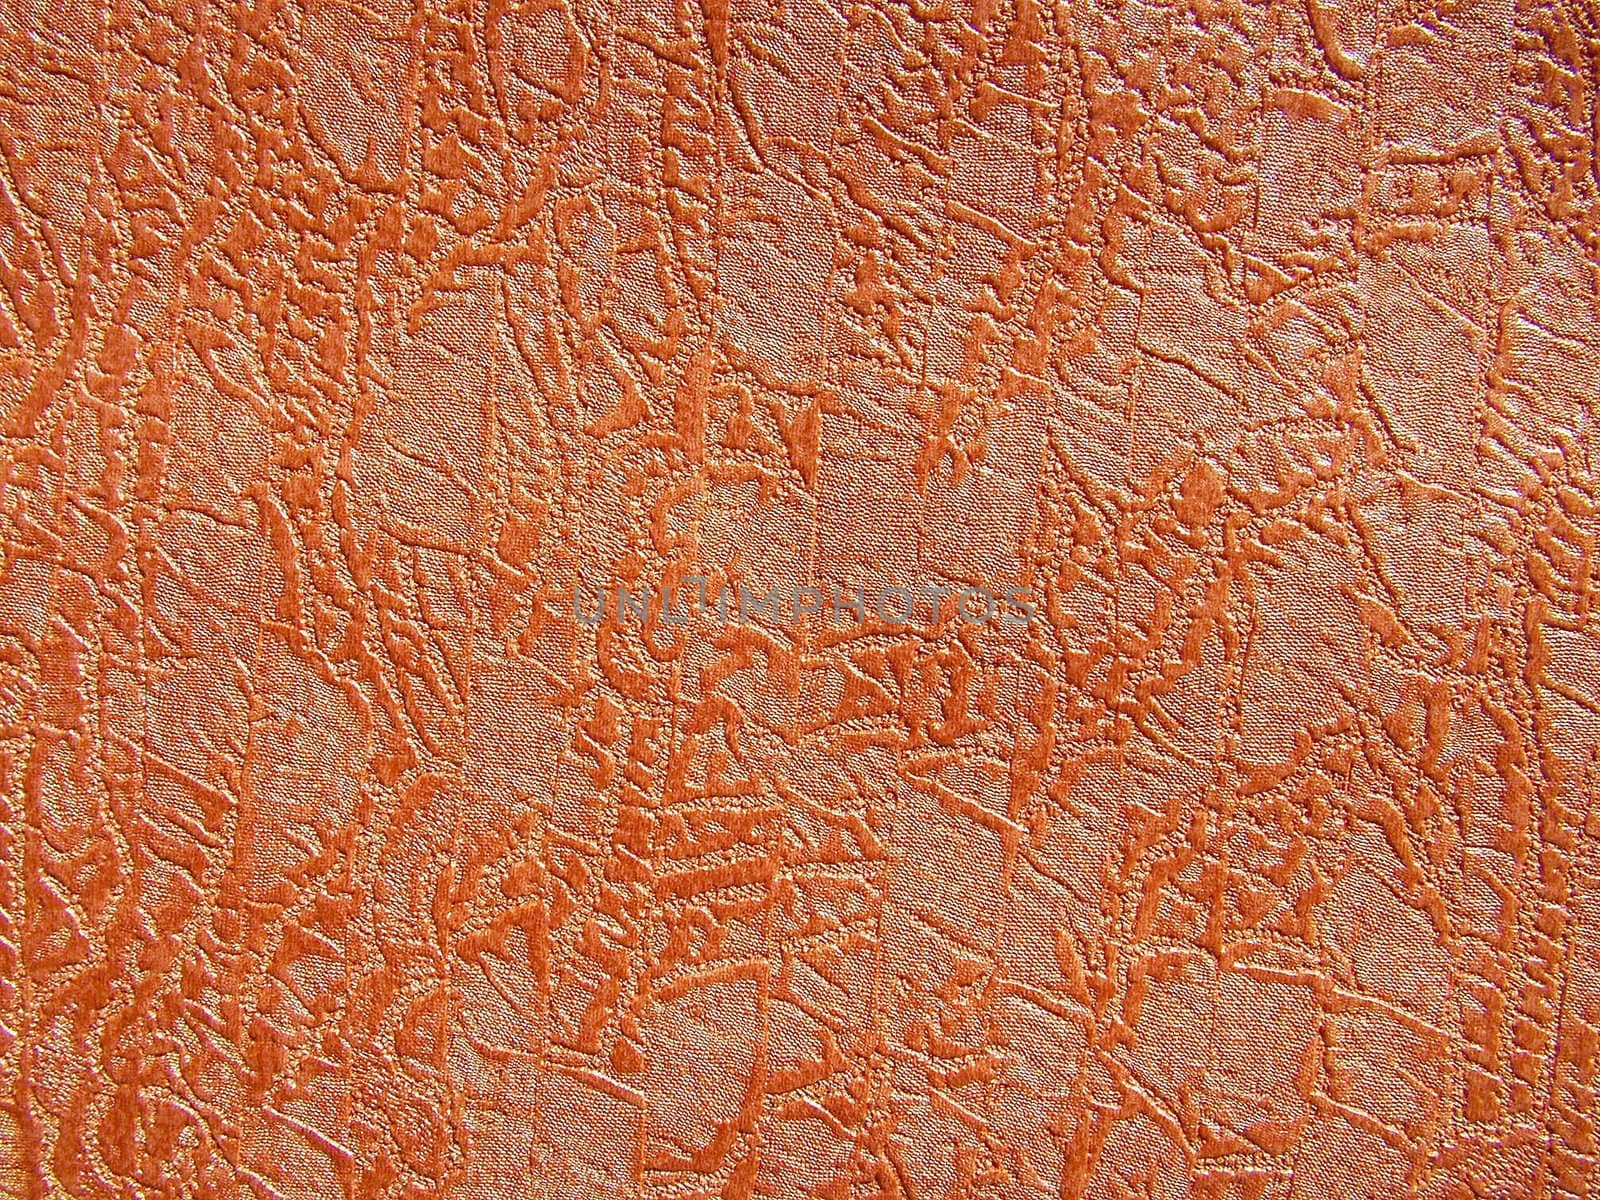 Wallpapers texture by palomnik